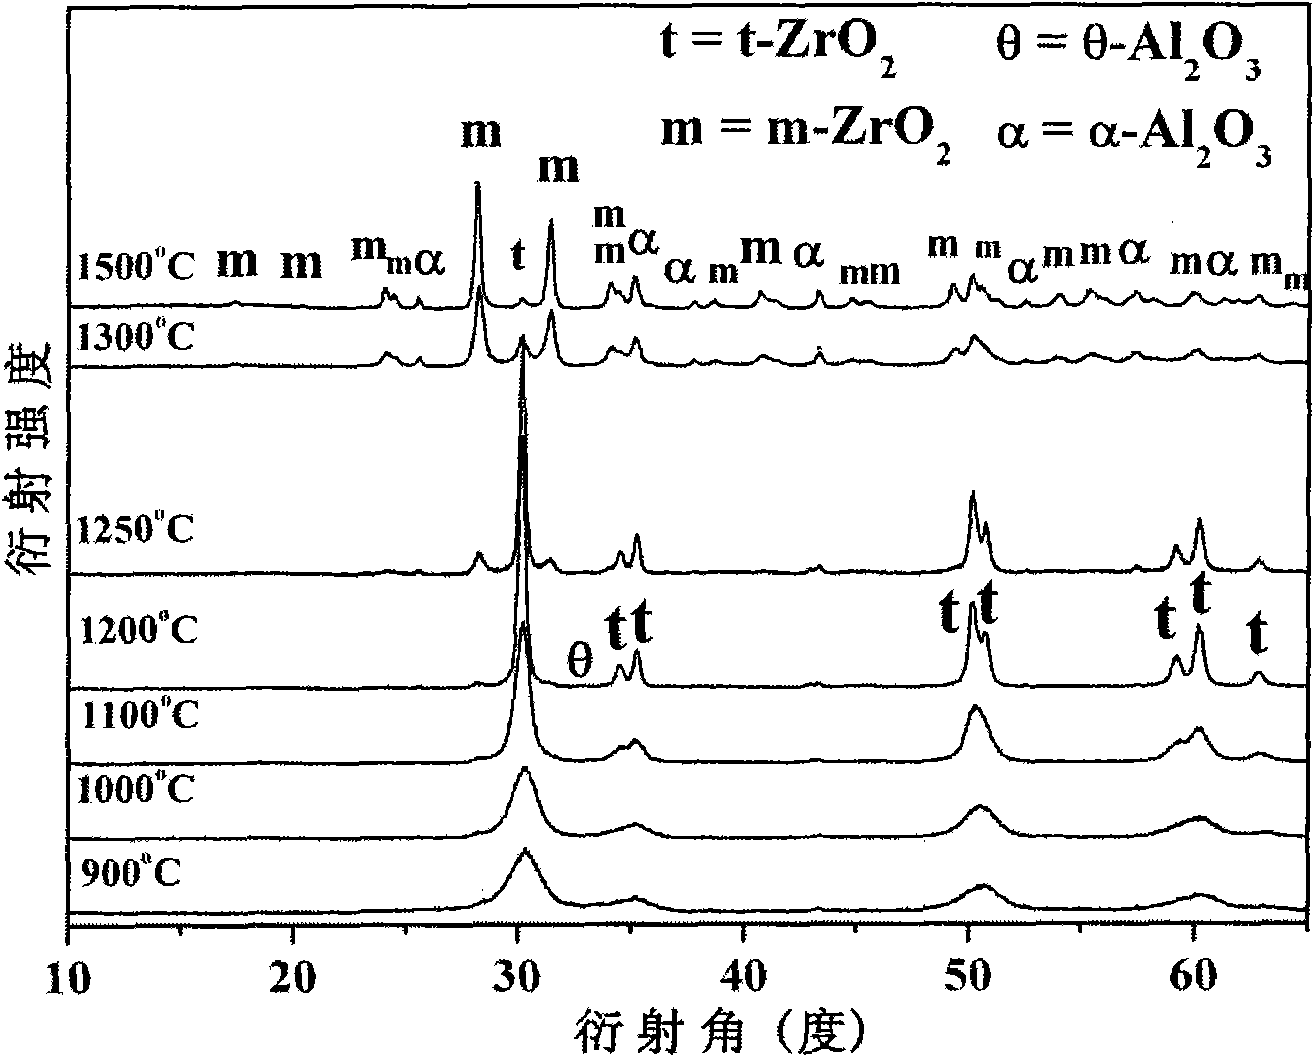 Method for preparing zirconia-alumina composite material by way of zirconia-alumina-carbon oxidation